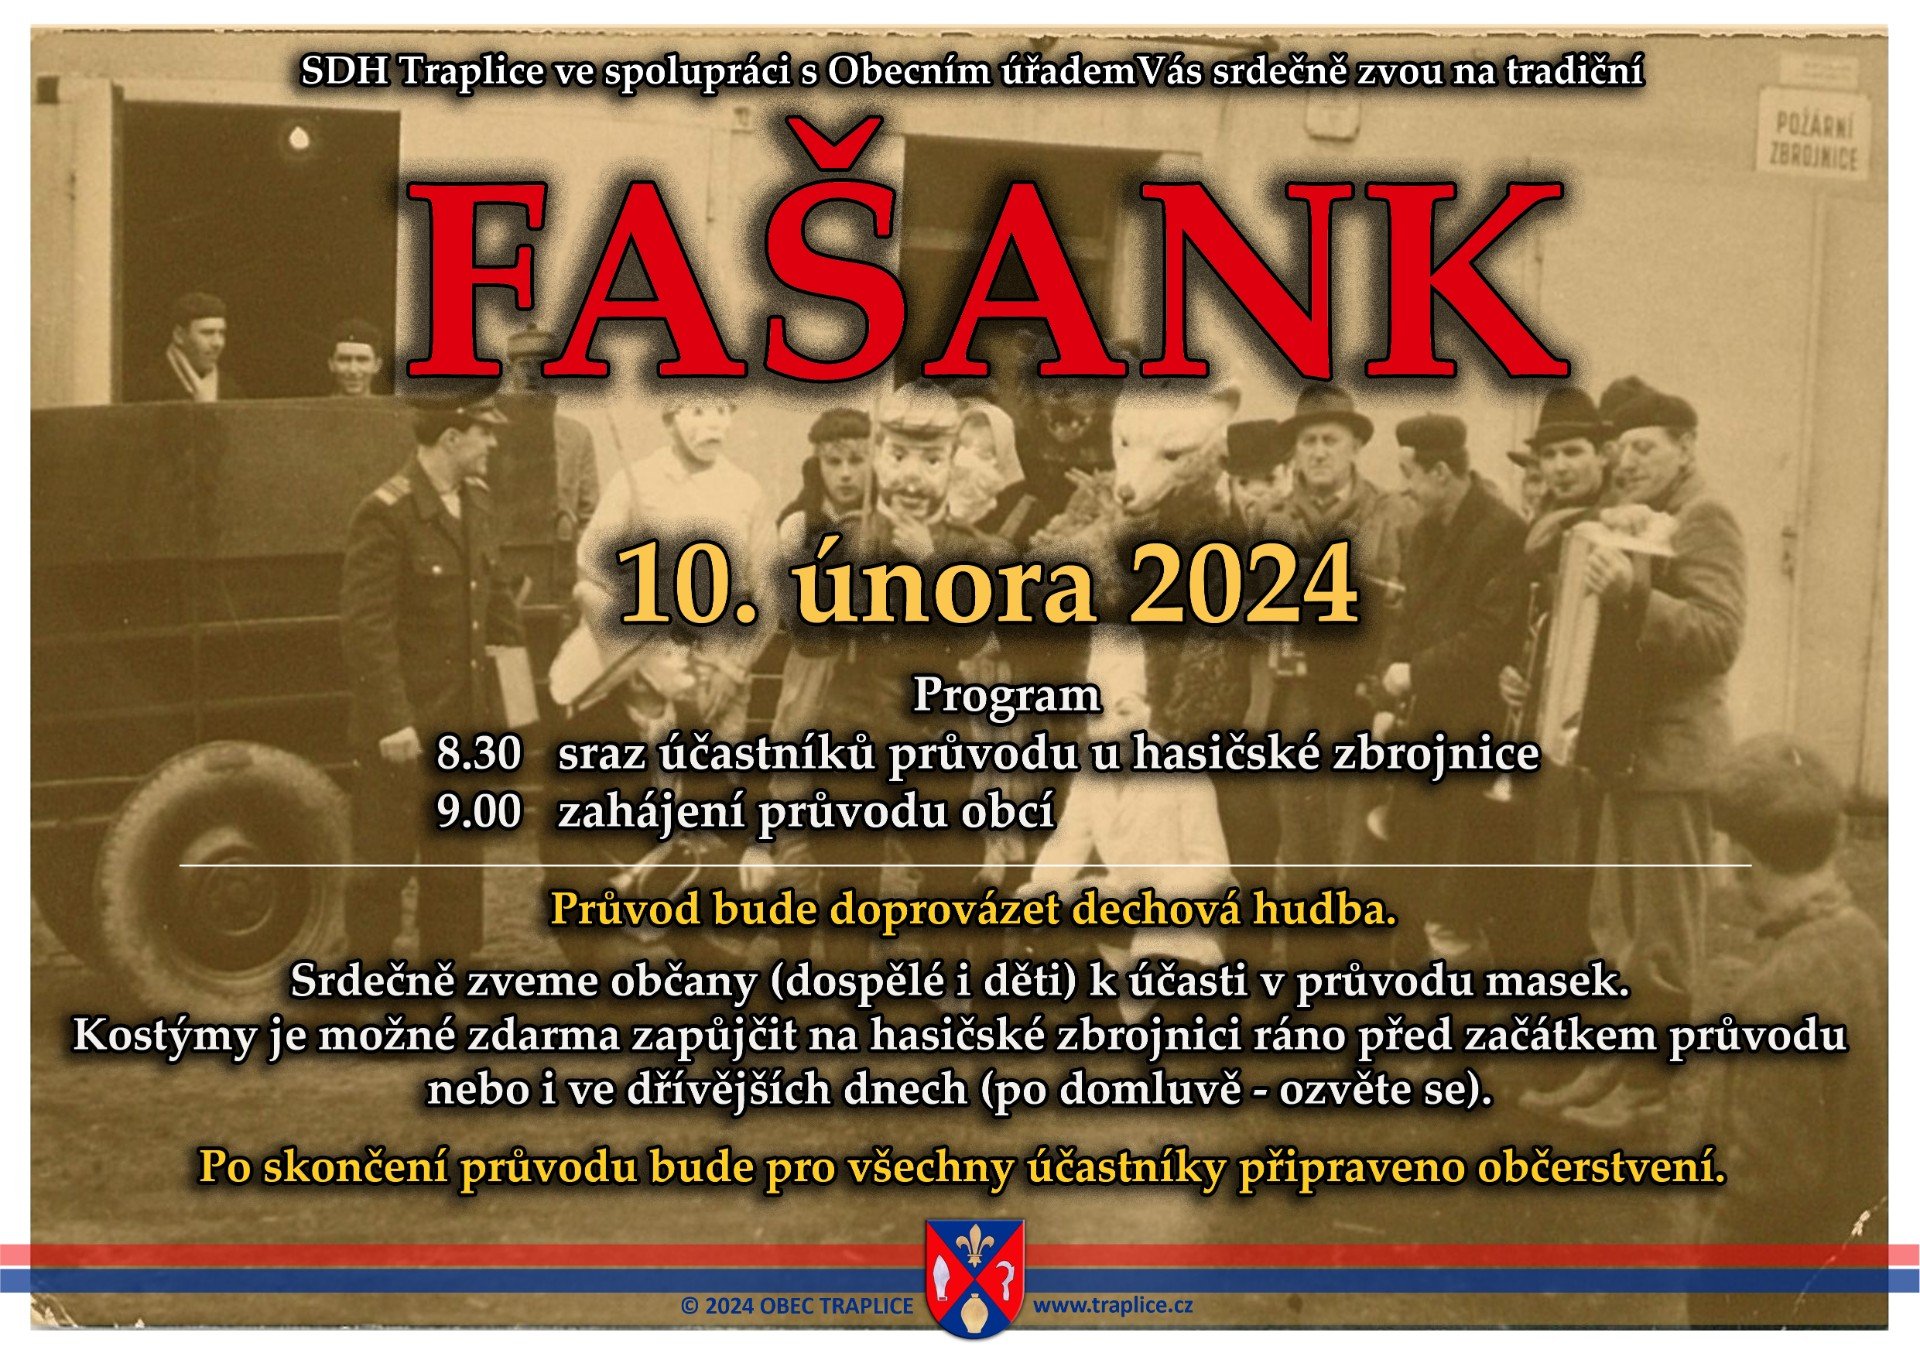 Fašank